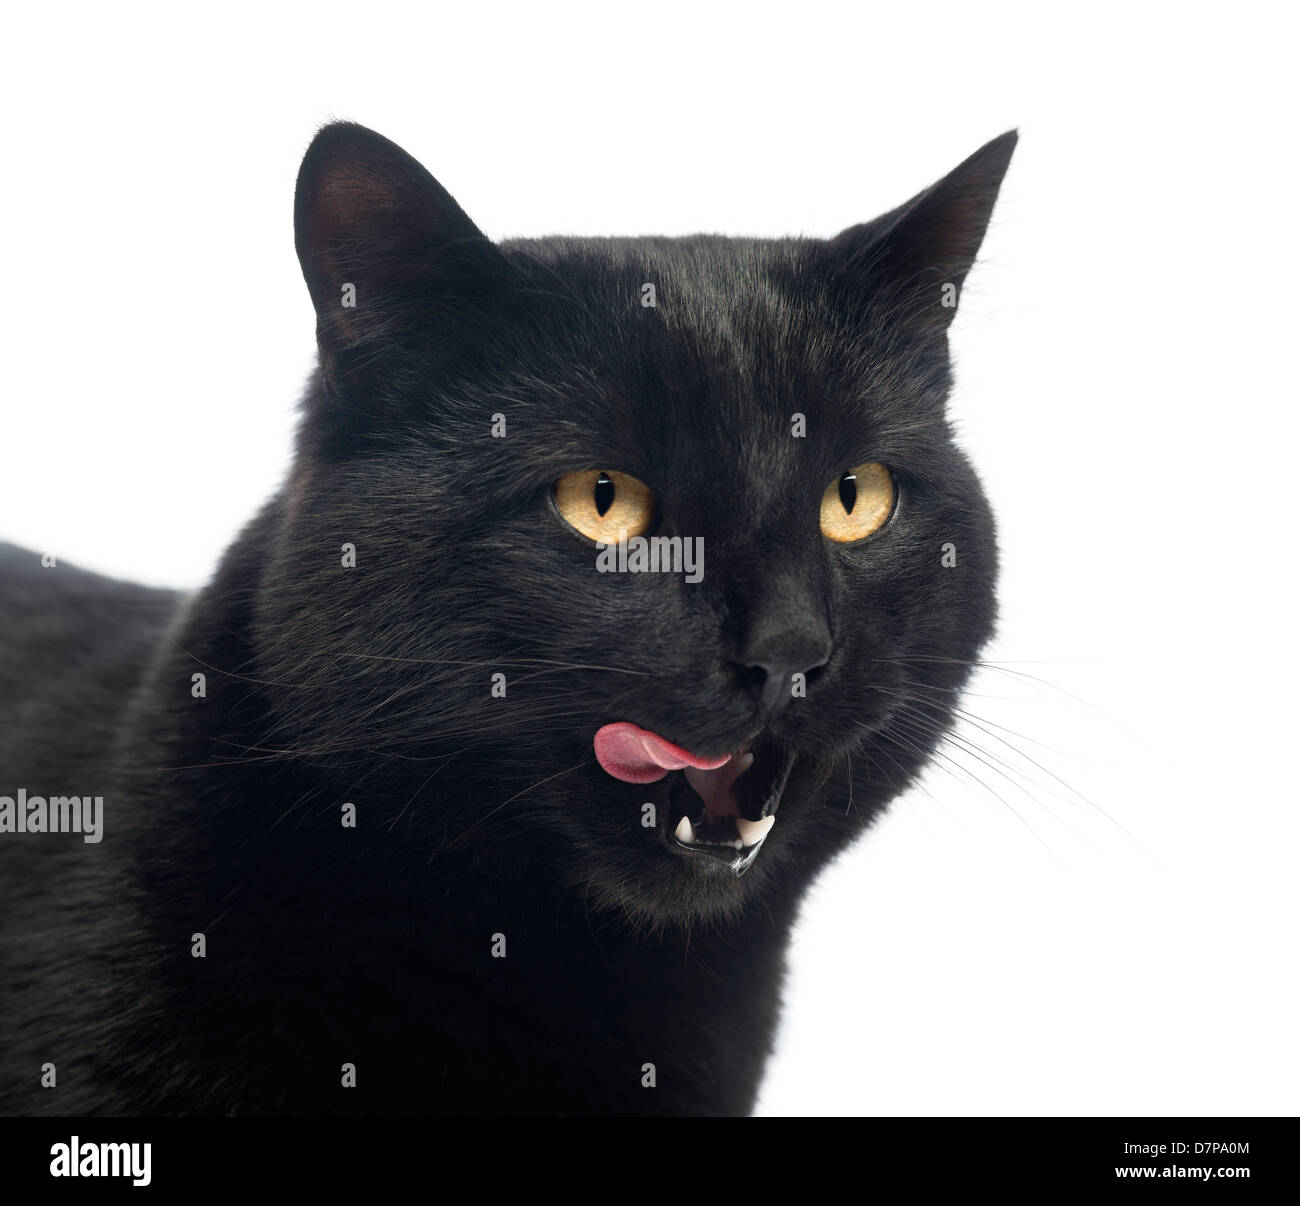 Black cat licking lips against white background Stock Photo